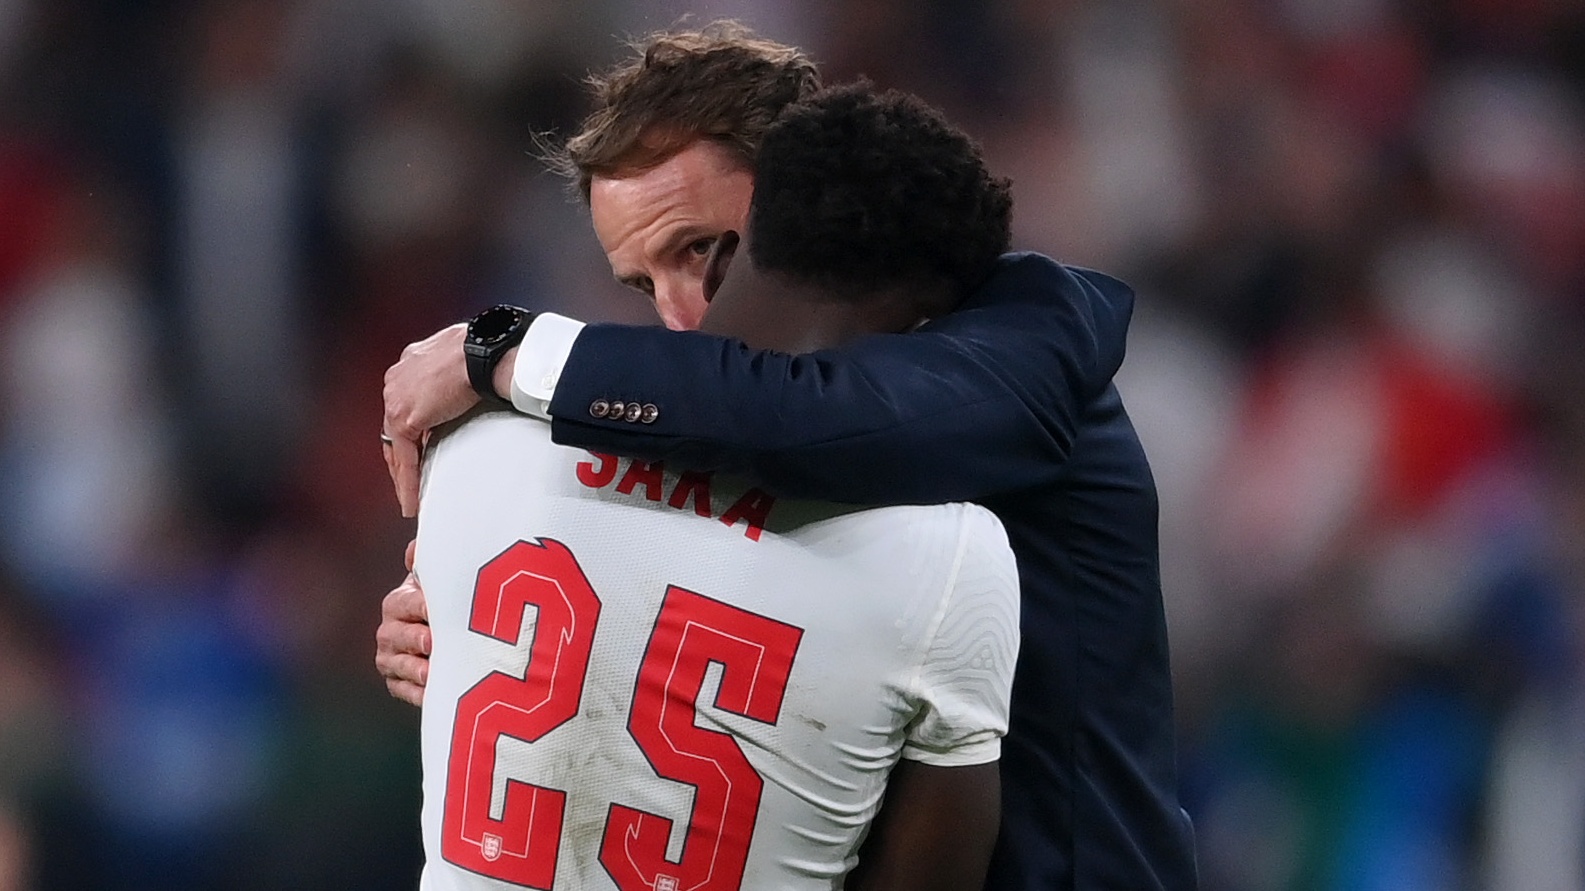 Gareth Southgate consoles Bukayo Saka after England’s defeat